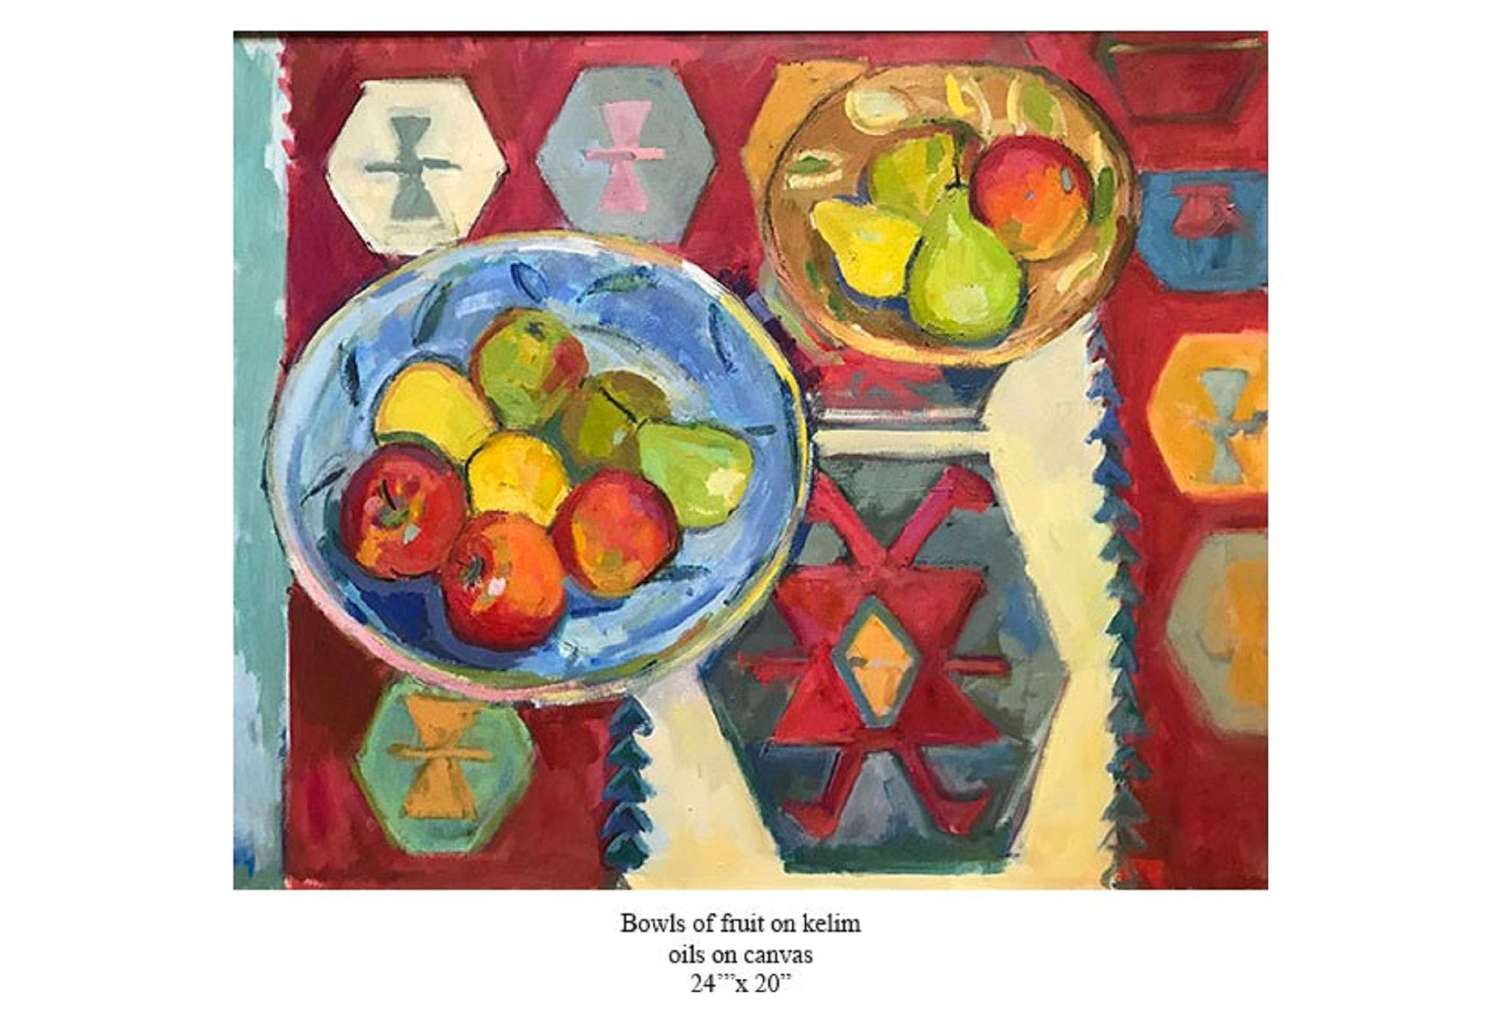 Antonia Ogilvie-Forbes. Bowls of fruit on Kelim.